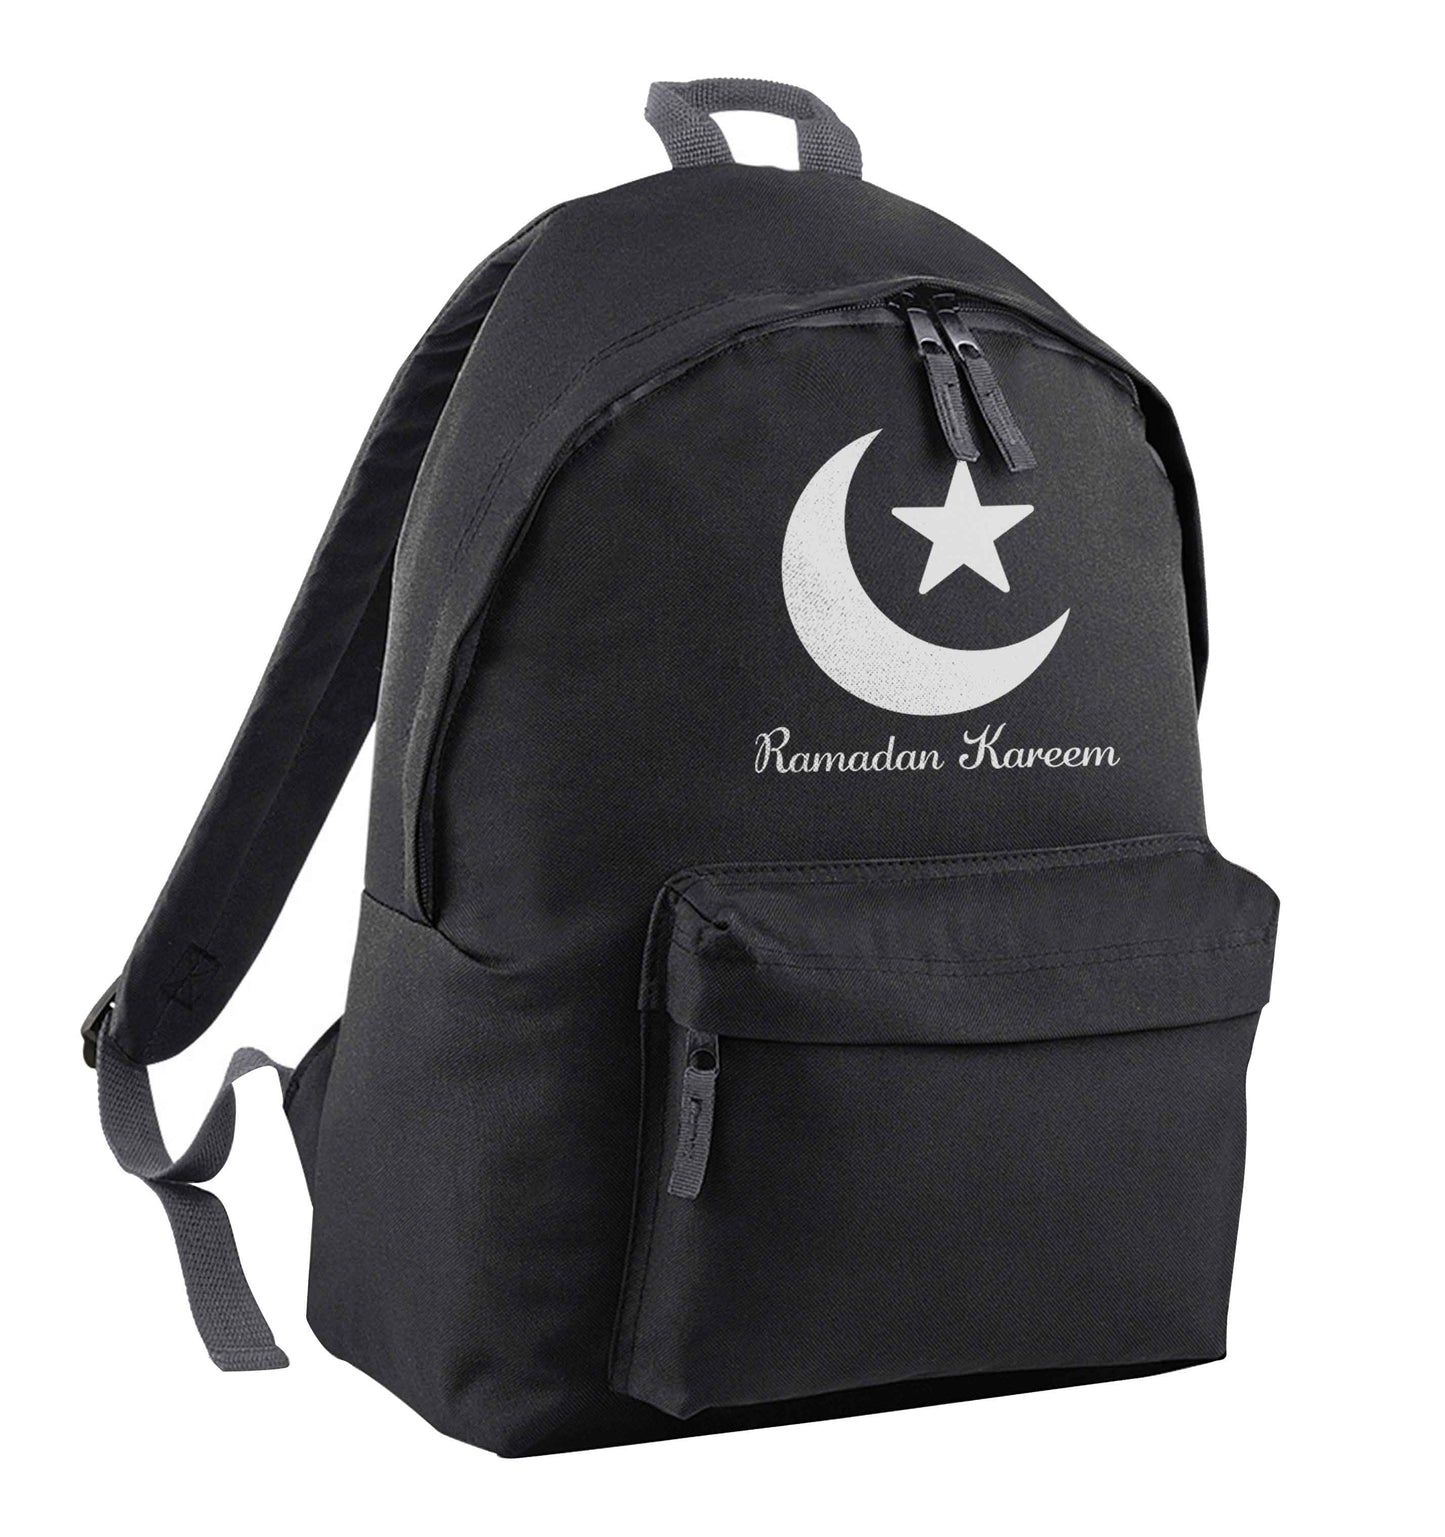 Ramadan kareem black adults backpack